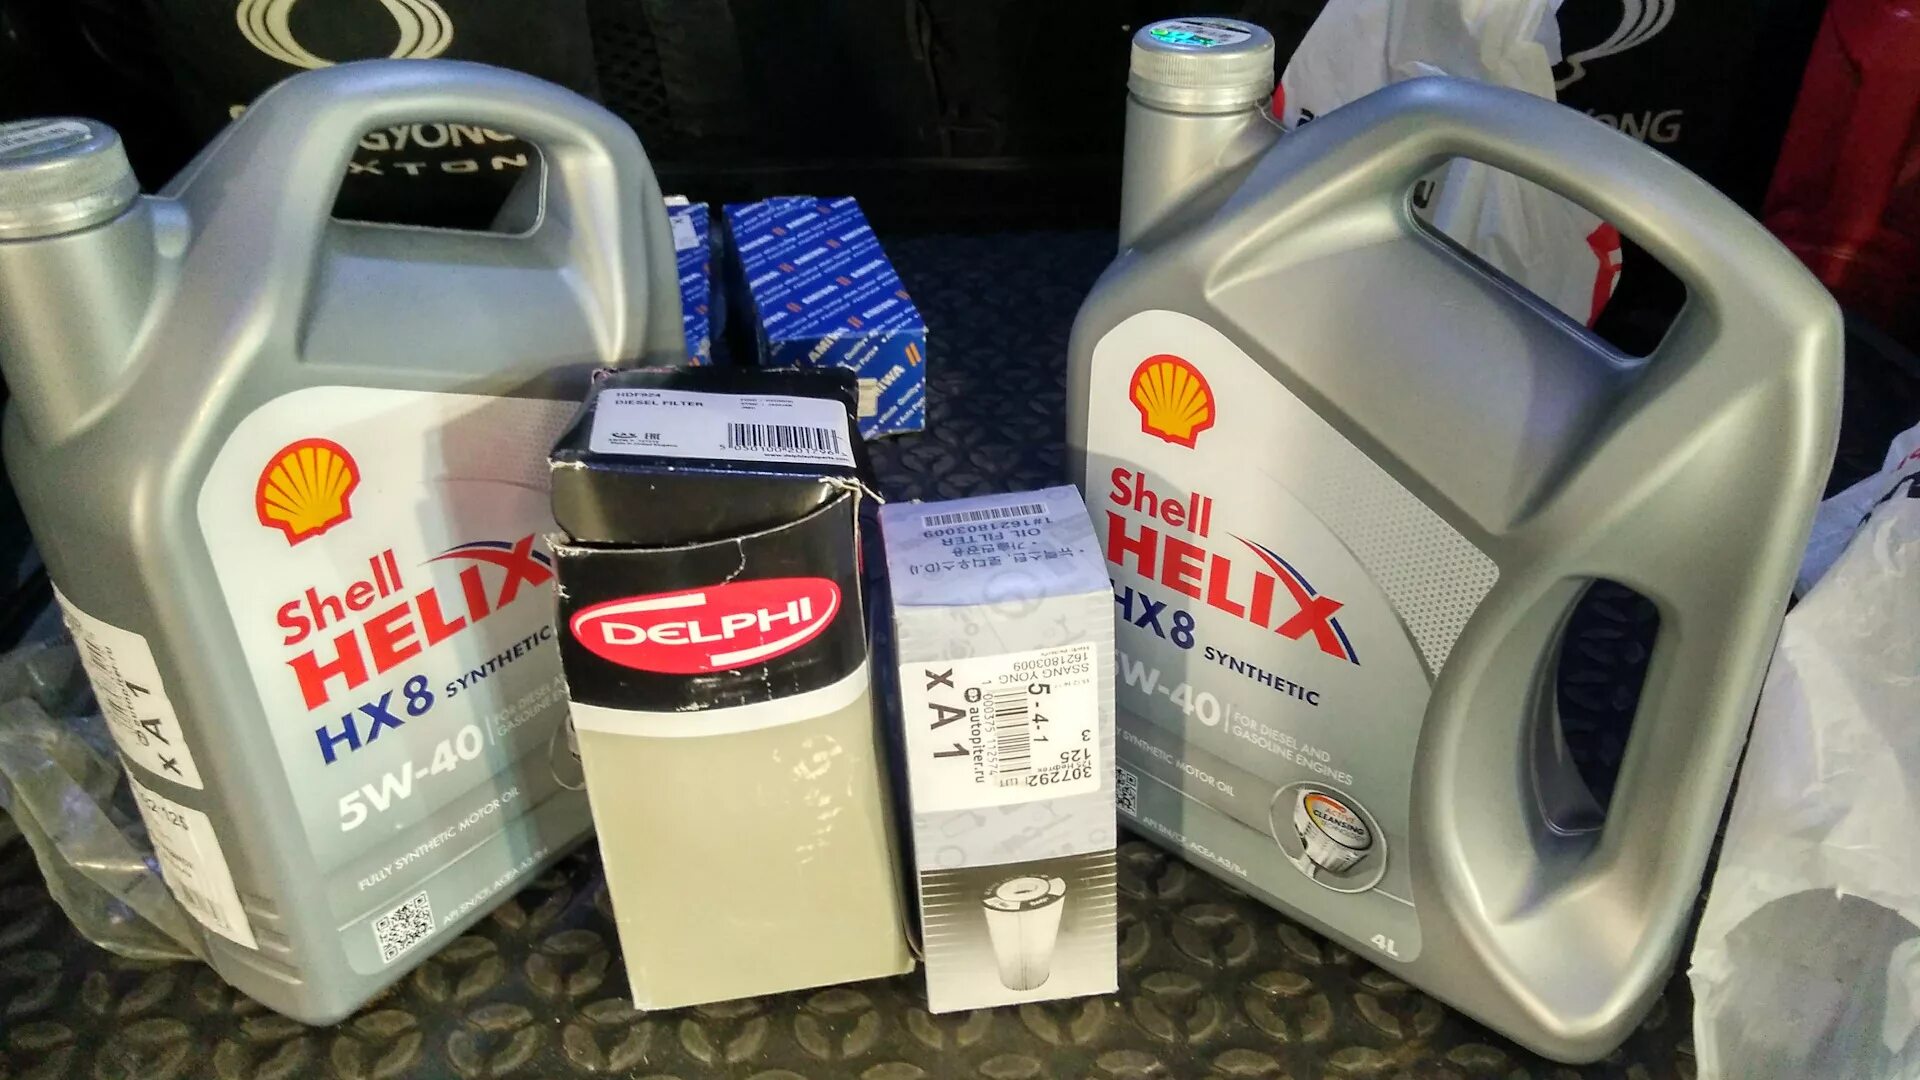 Моторное масло Shell для SSANGYONG Rexton 2 дизель. Масло ДВС Рекстон 2.7 дизель. SSANGYONG Rexton дизель масло ДВС 2.7 фильтр масляный. Масло в Rexton 2 дизель. Масло в рекстон дизель